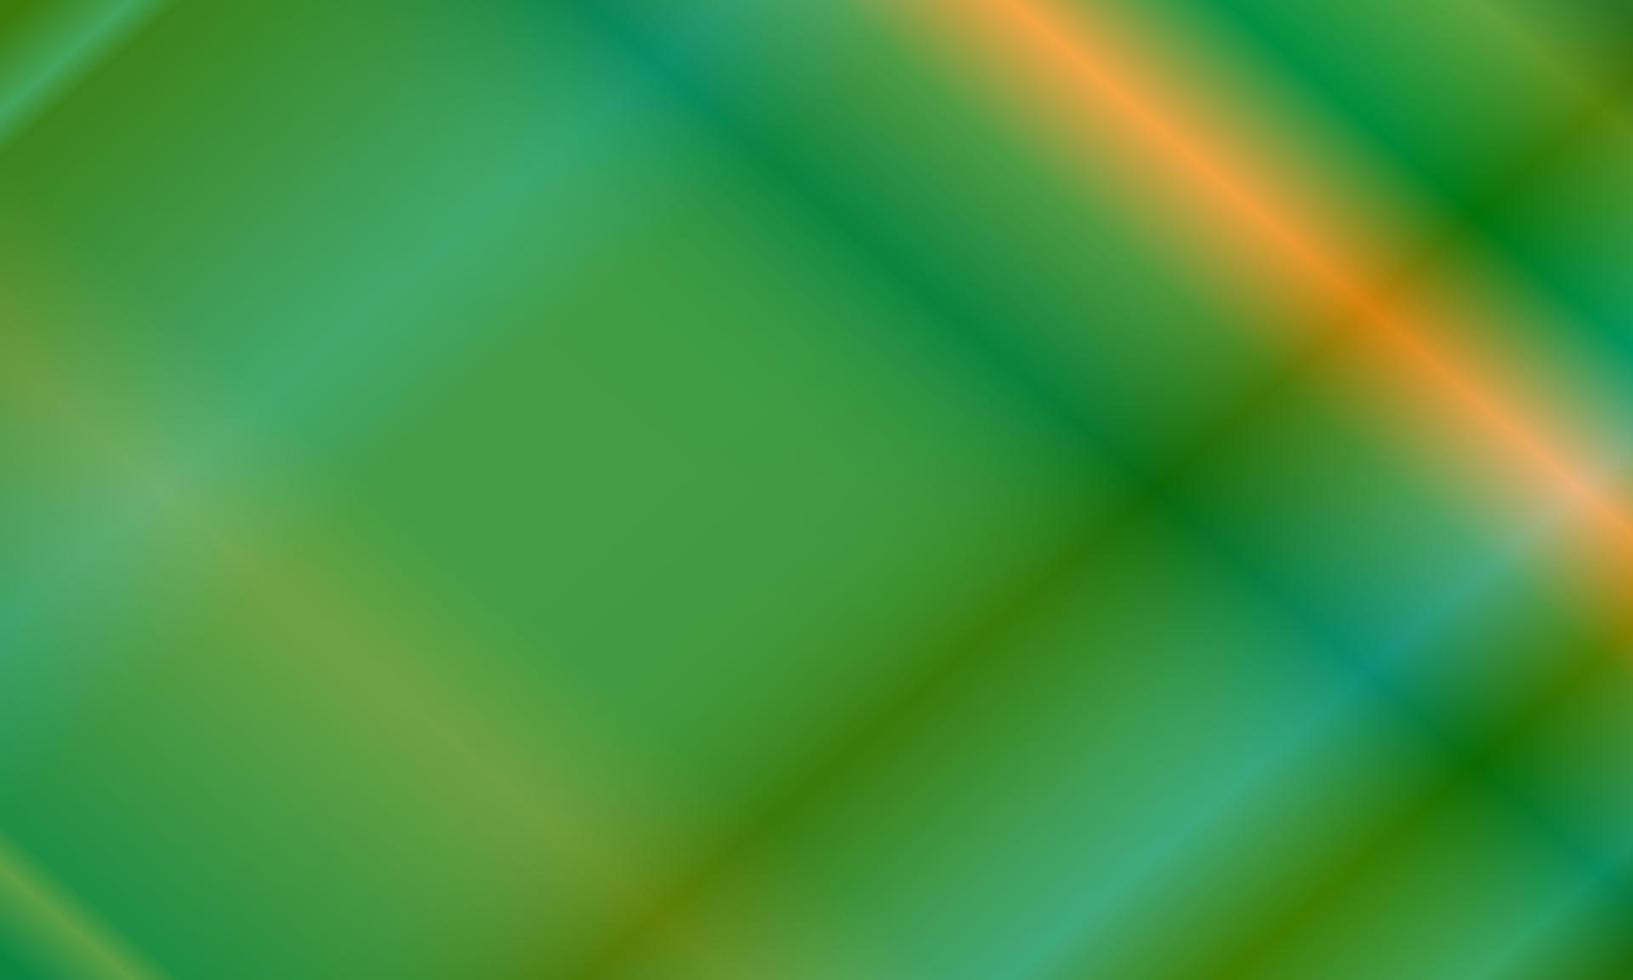 fondo abstracto verde oscuro y dorado con patrón de luz de neón. estilo brillante, degradado, borroso, moderno y colorido. ideal para fondo, telón de fondo, papel tapiz, portada, afiche, pancarta o volante vector